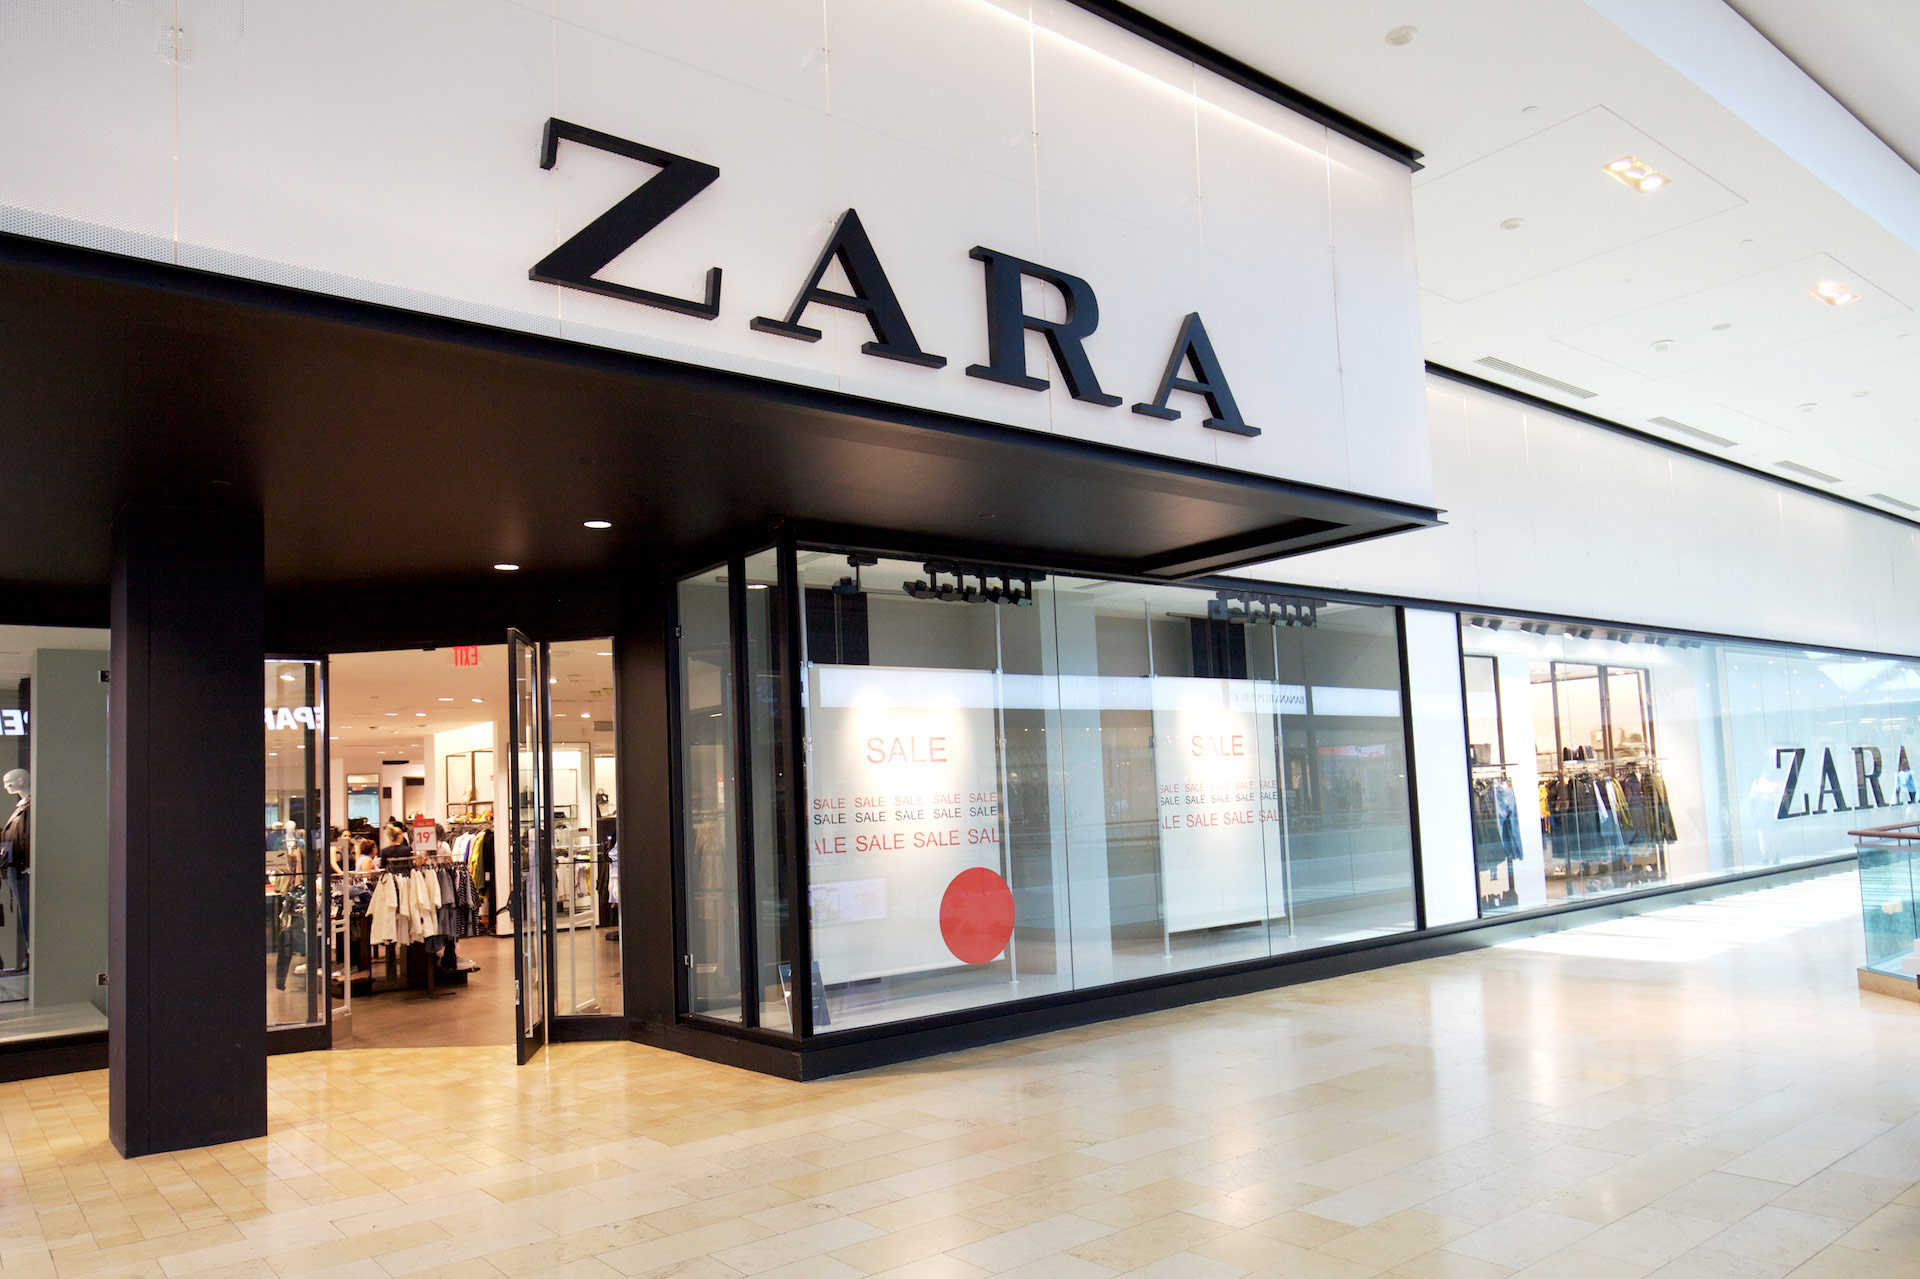 Zara anuncia vendas online no Brasil. Aos detalhes!